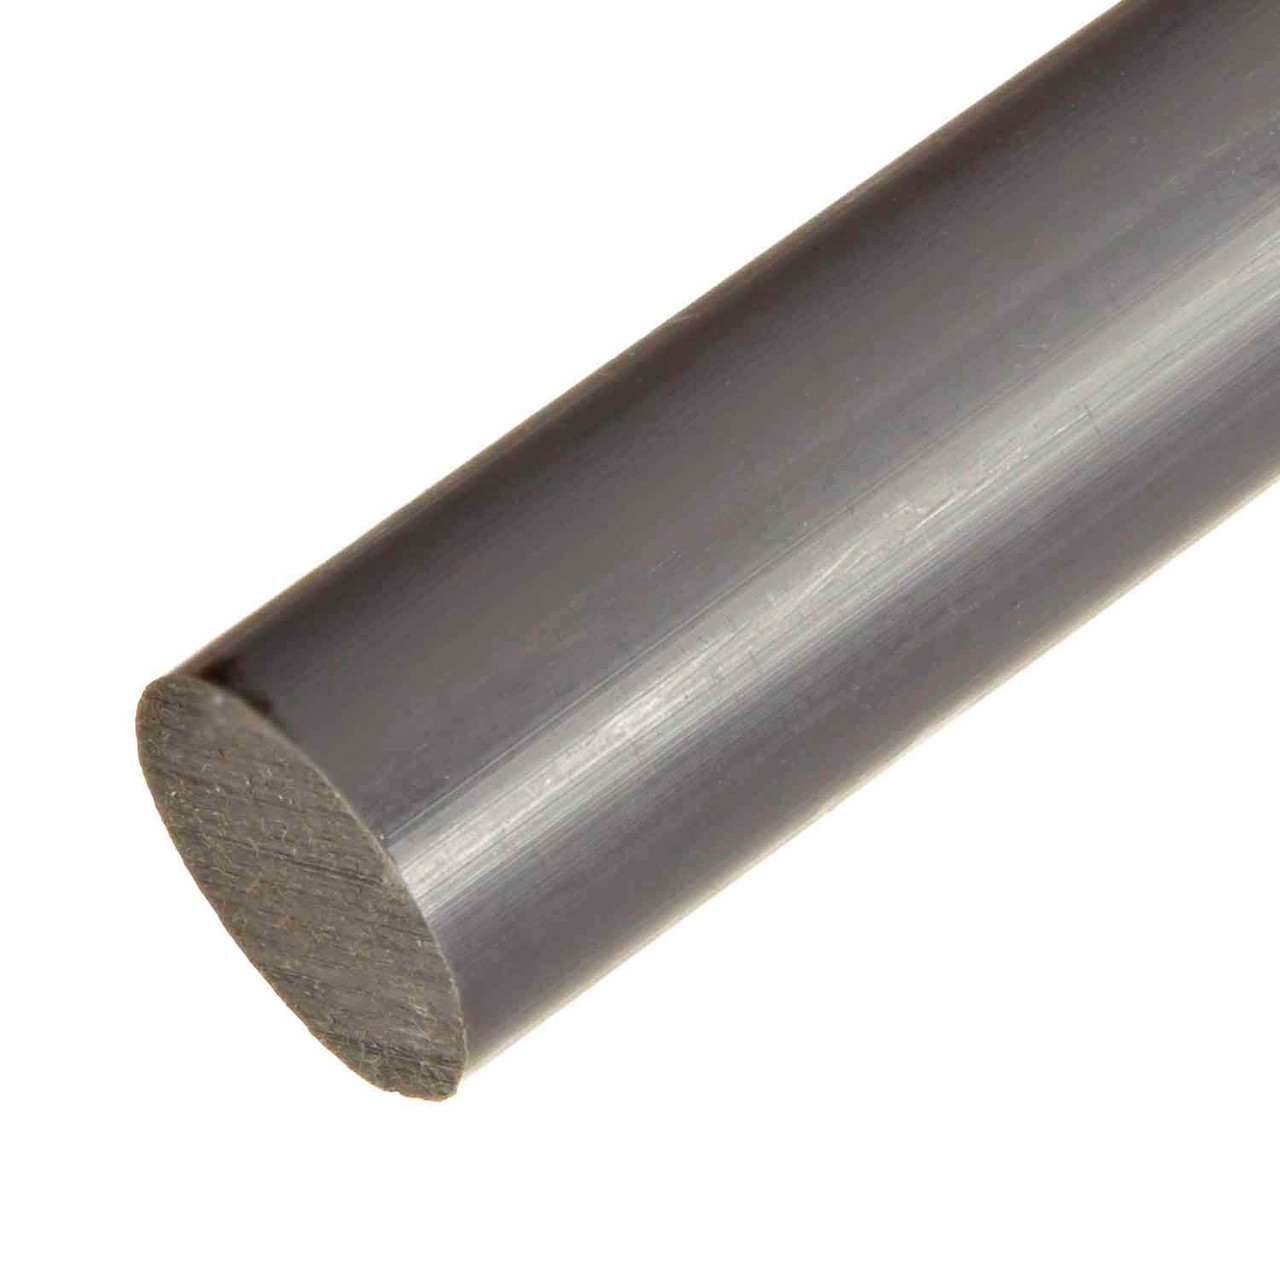 5.500 (5-1/2 inch) x 11 inches, PVC Type 1 Round Rod, Gray